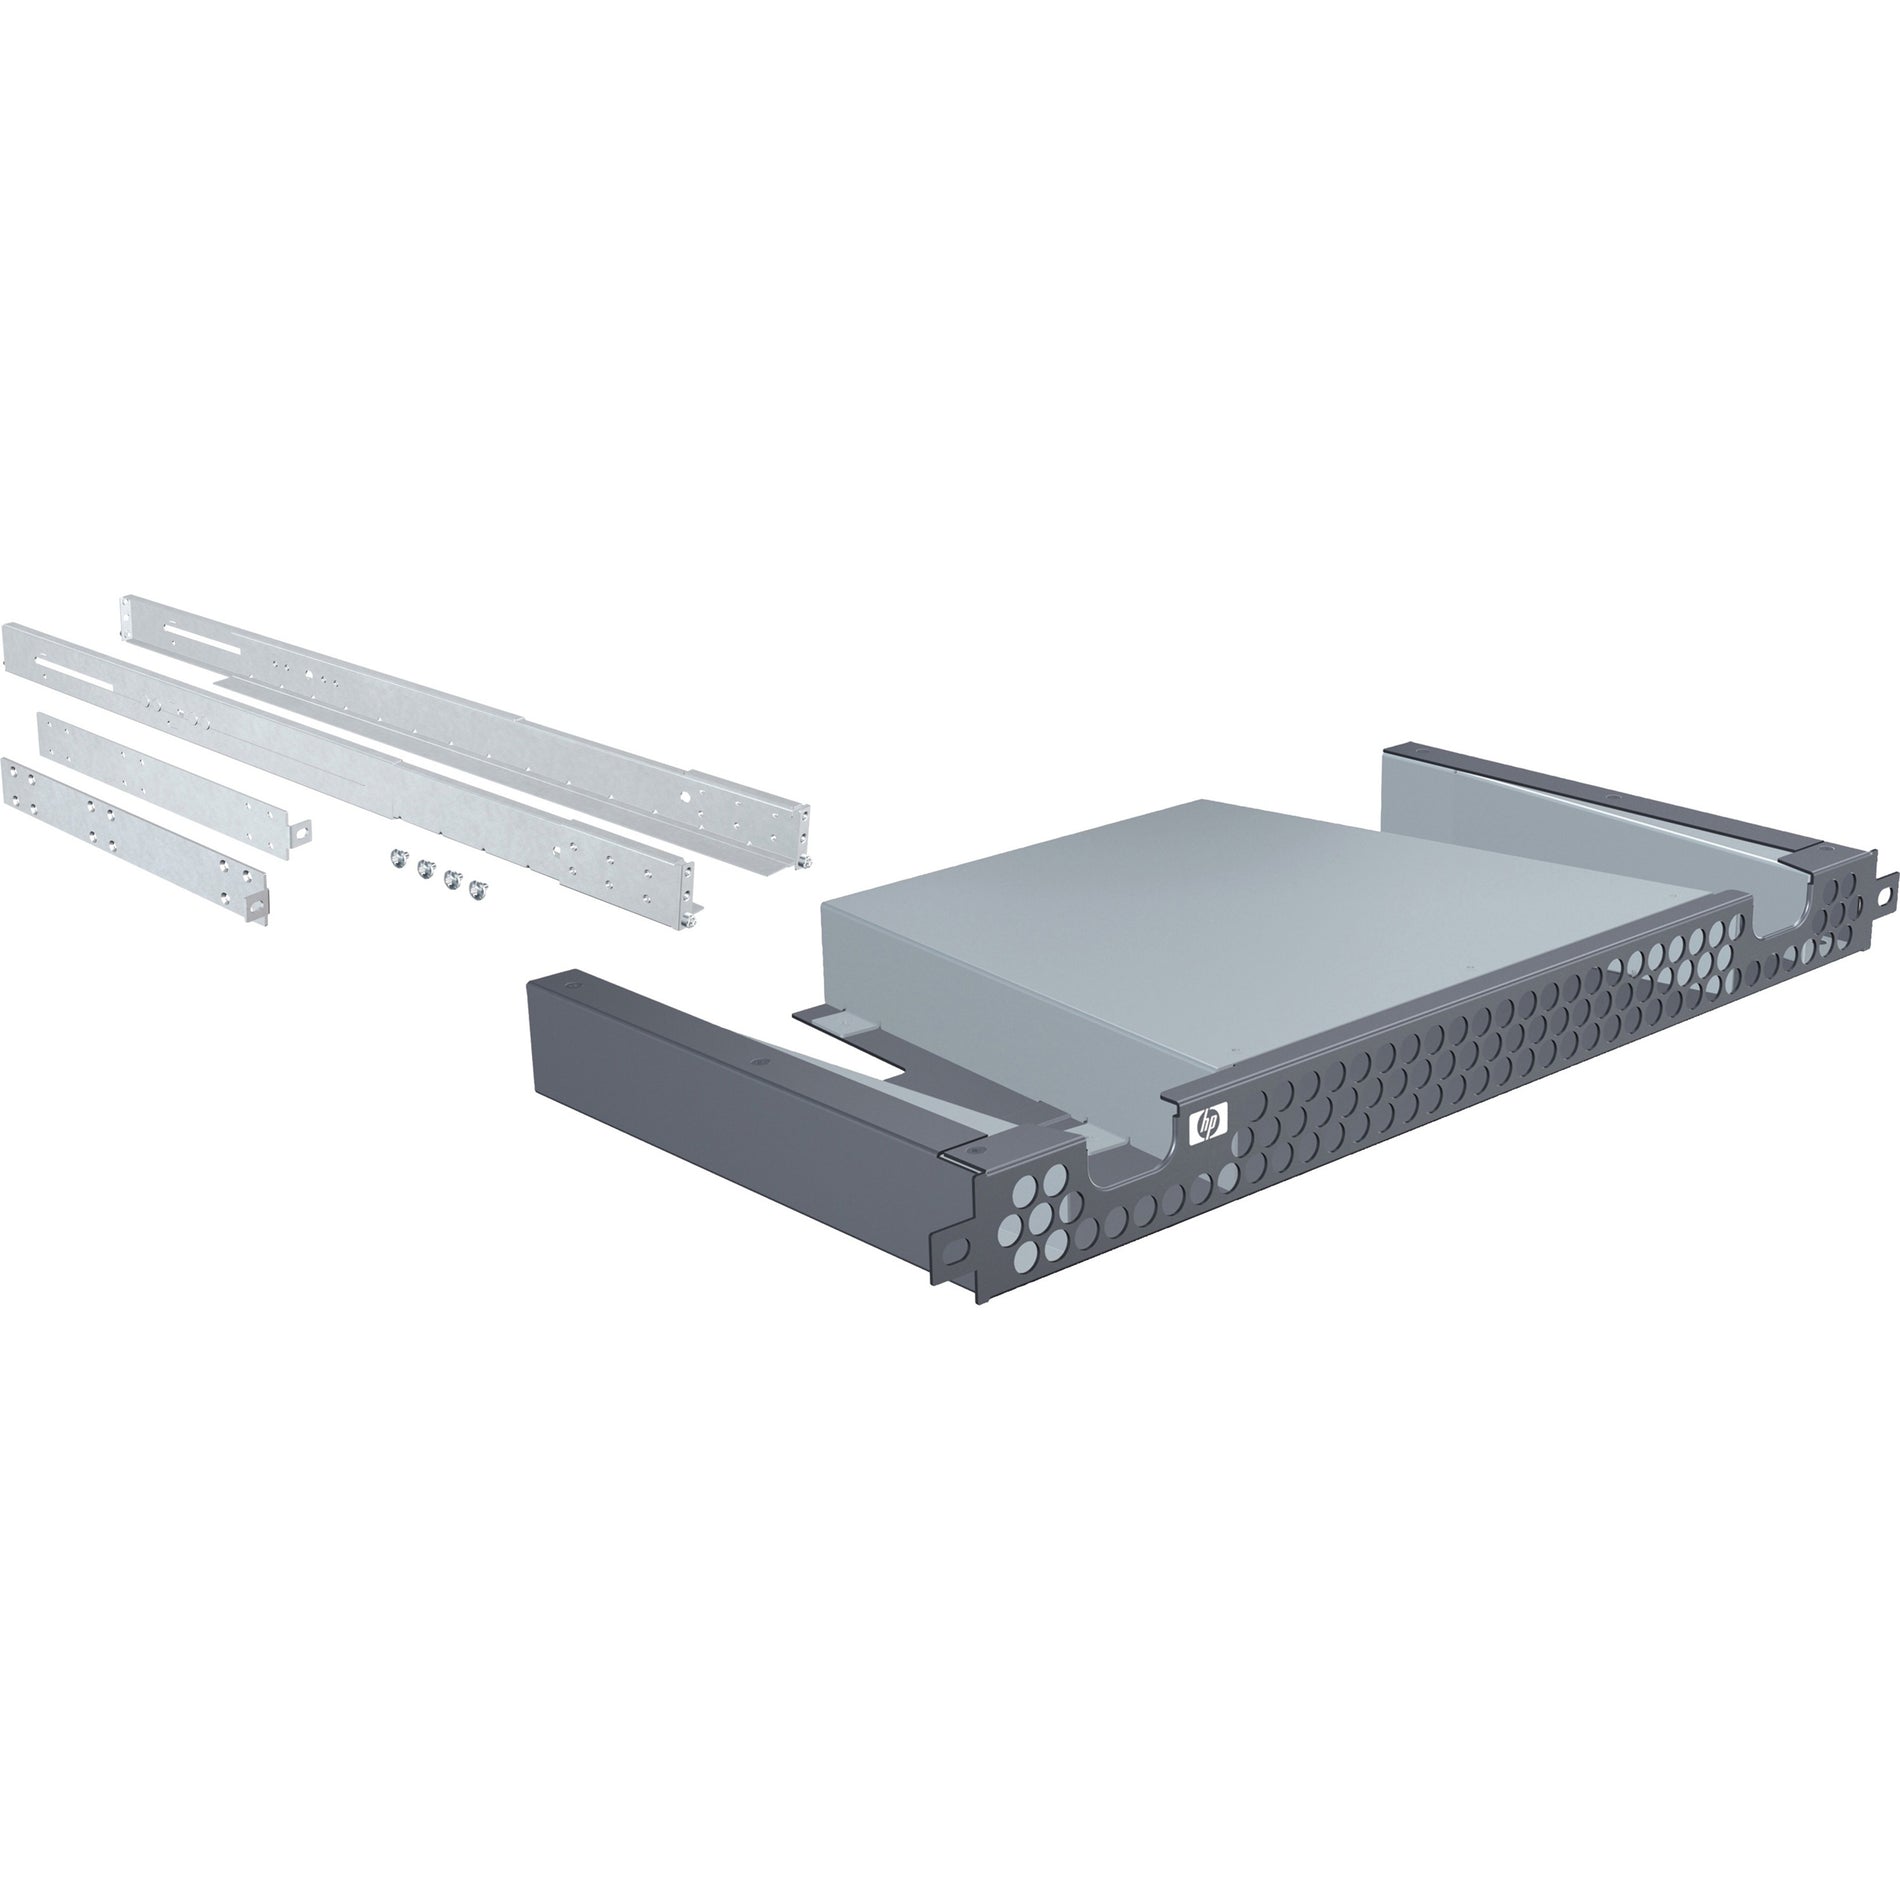 HPE J9852A X450 4U/7U Univ 4-Post Rack Mount Kit, for Network Switch